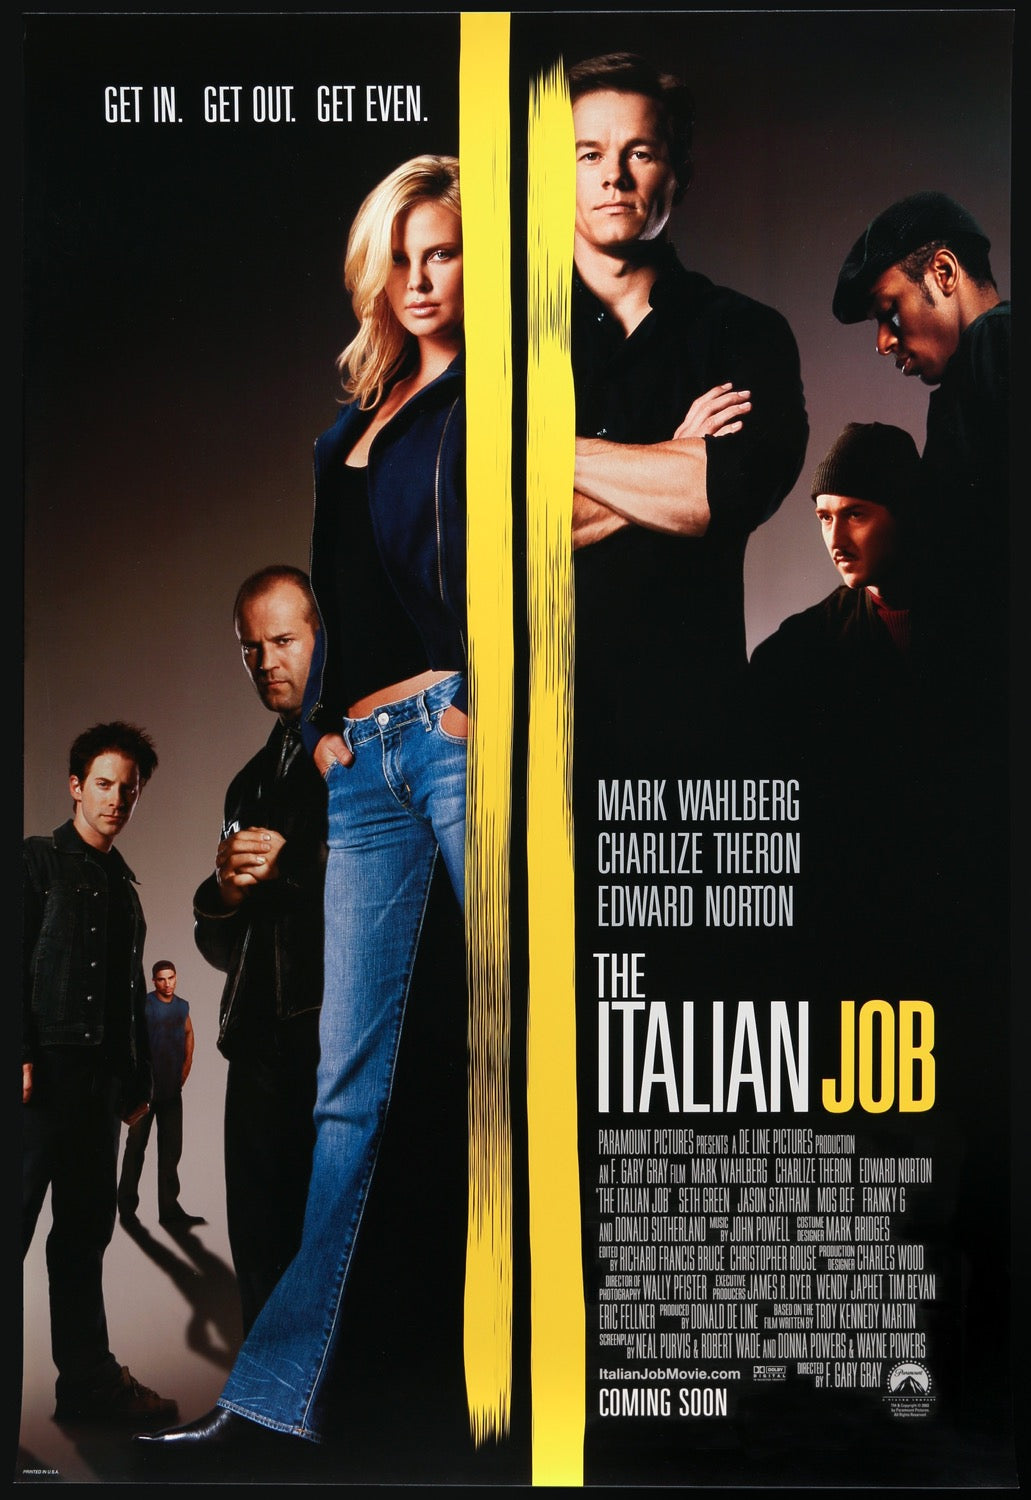 Italian Job (2003) original movie poster for sale at Original Film Art